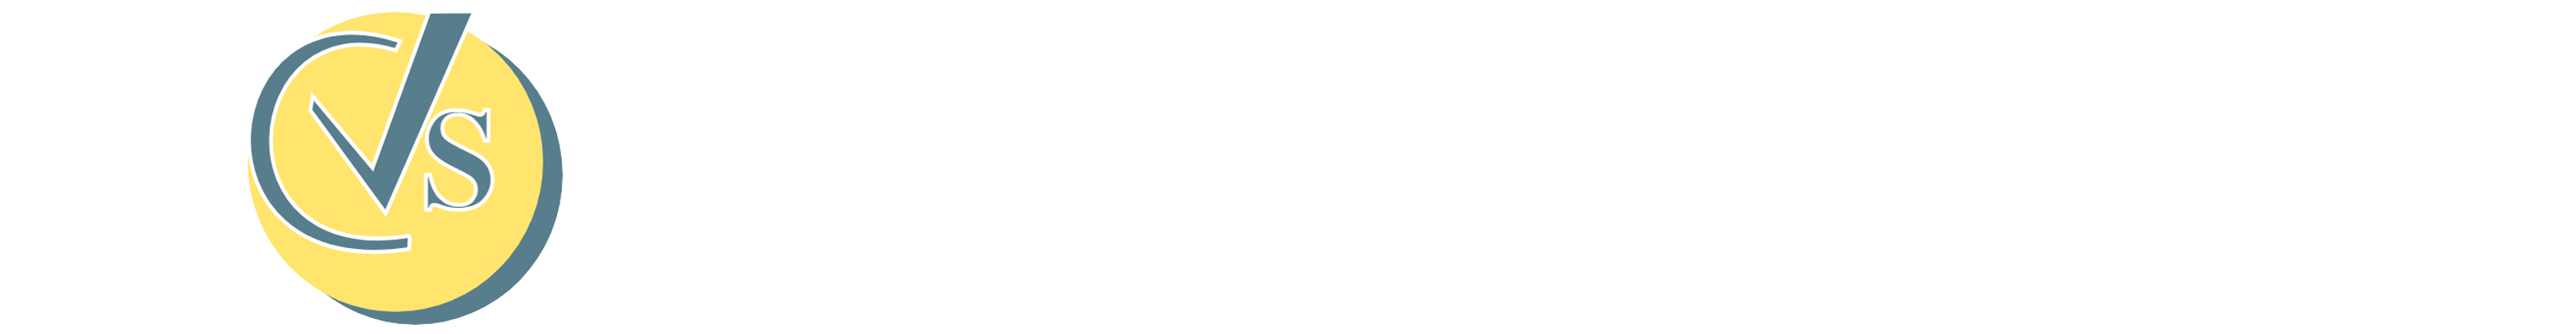 CodeceptJS logo